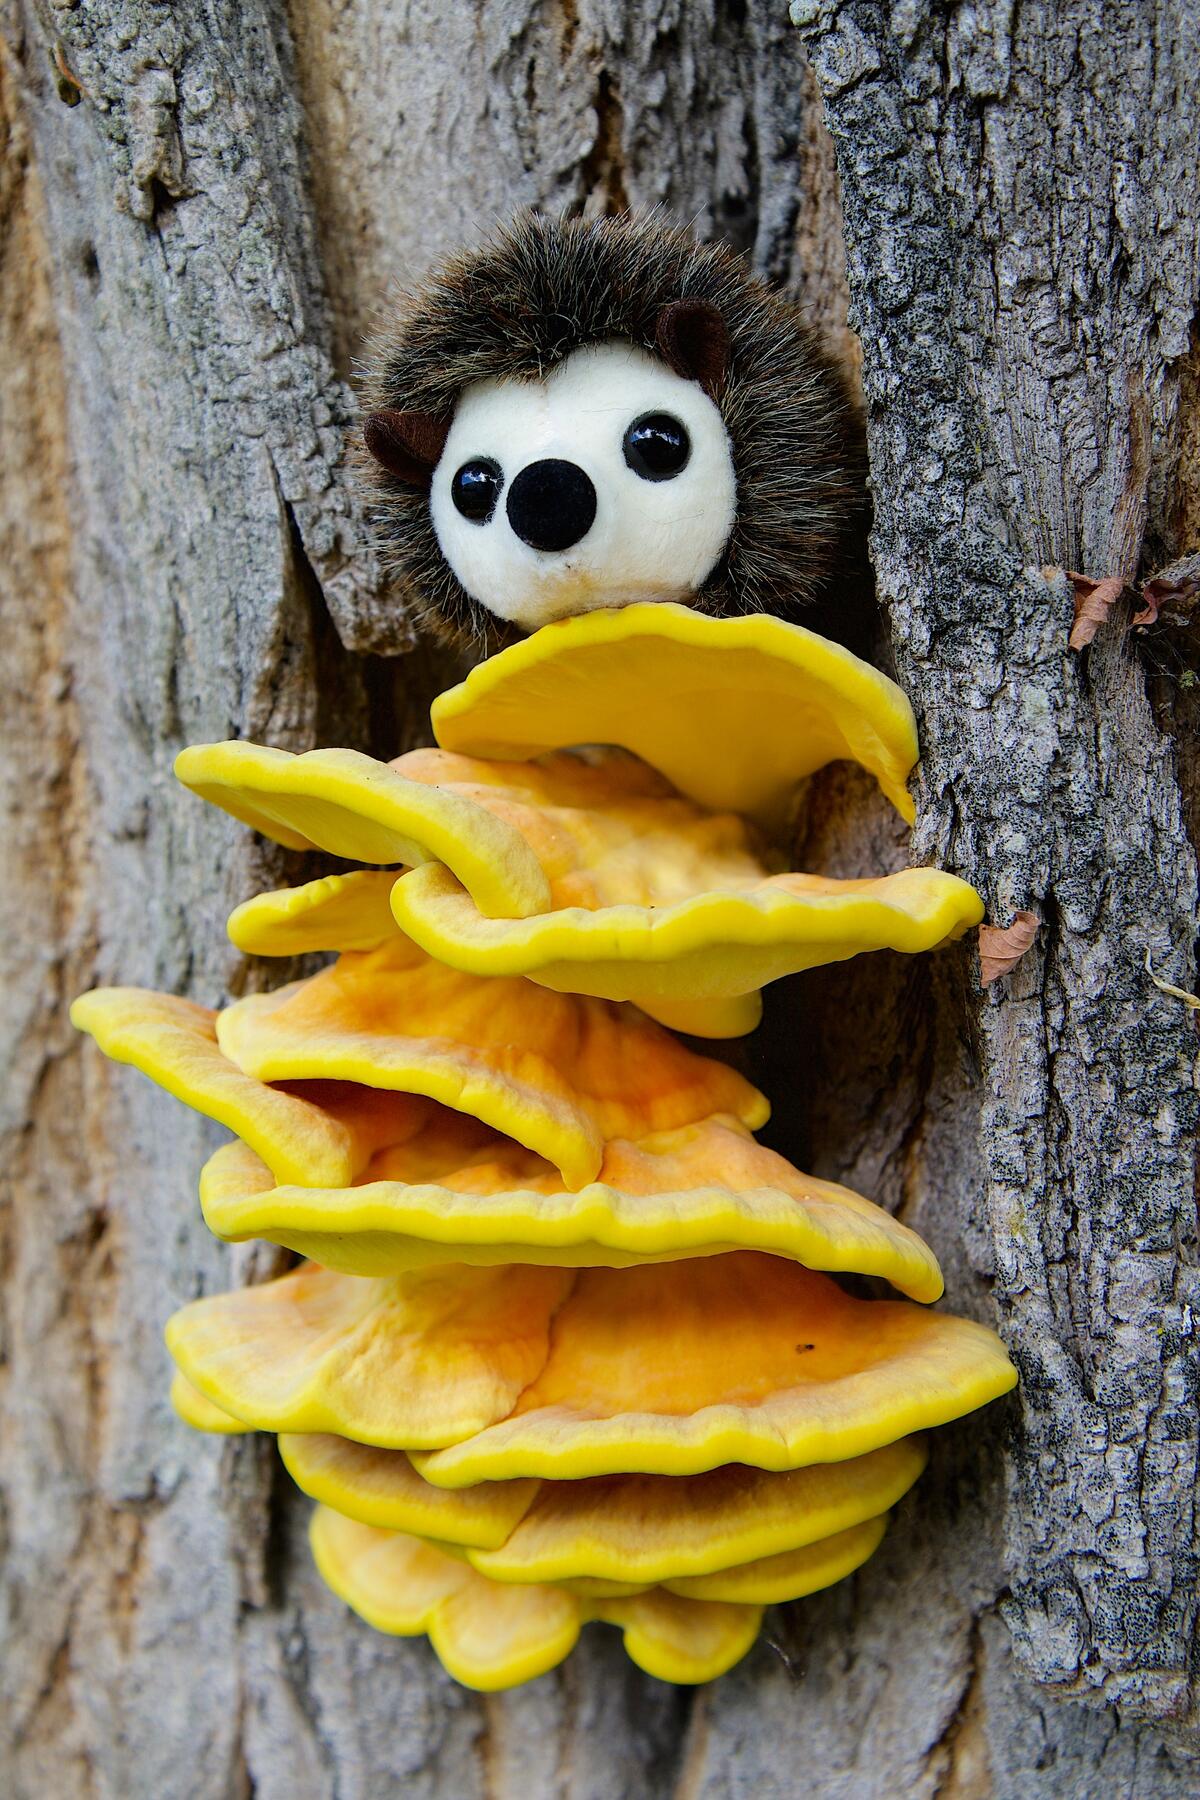 Yellow mushrooms grow on the bark of a tree